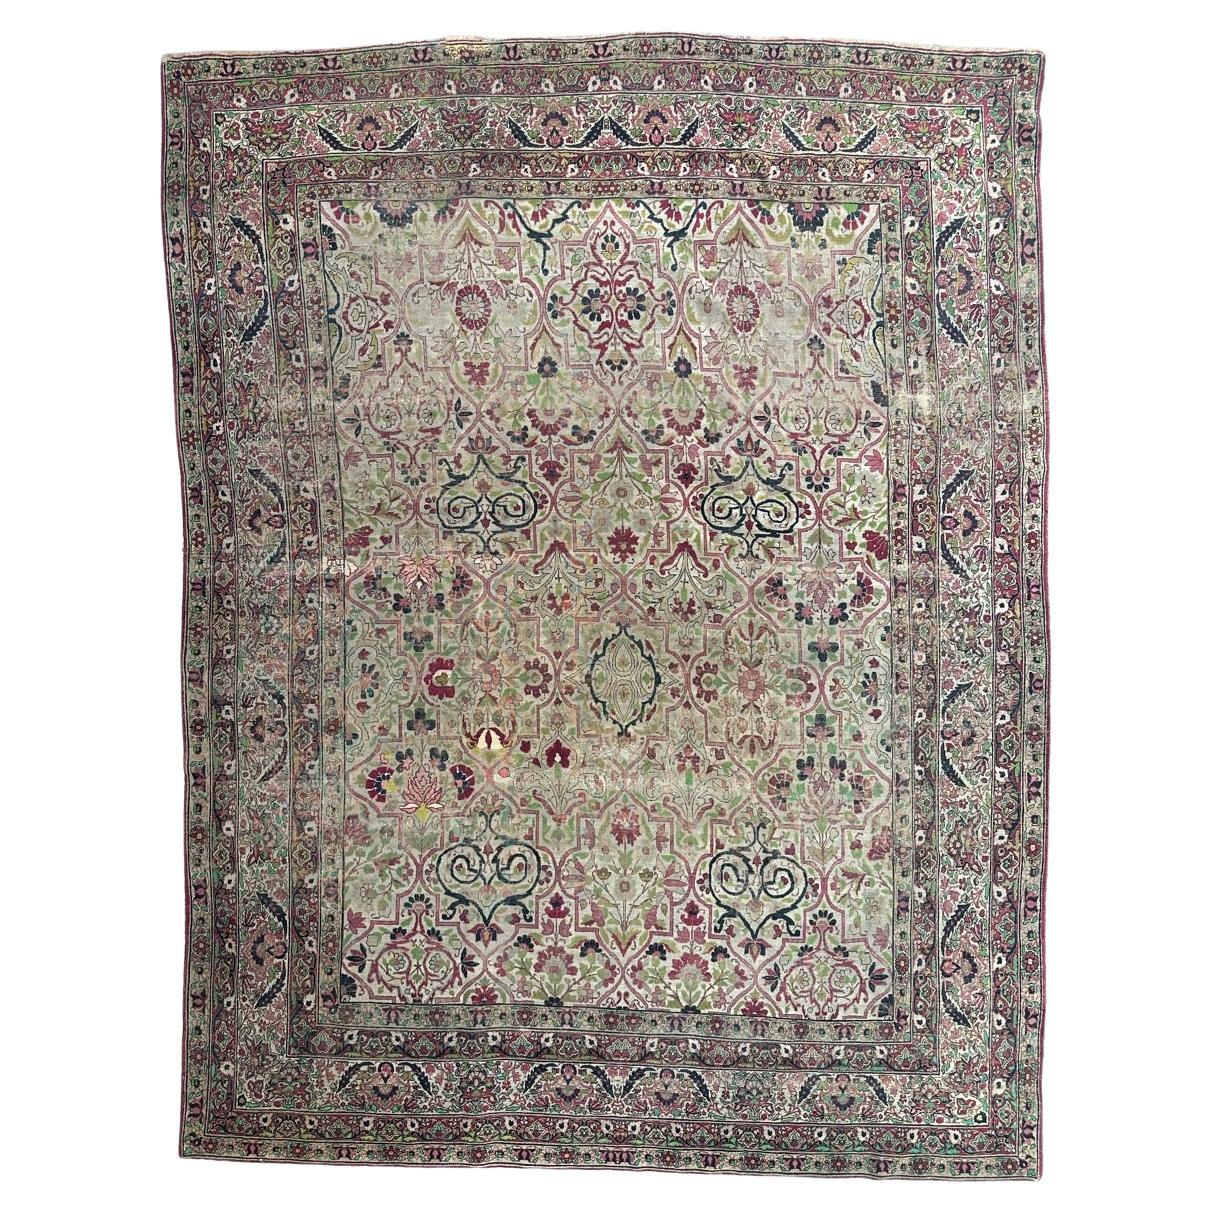 Bobyrug’s Nice large antique fine Kirman rug 